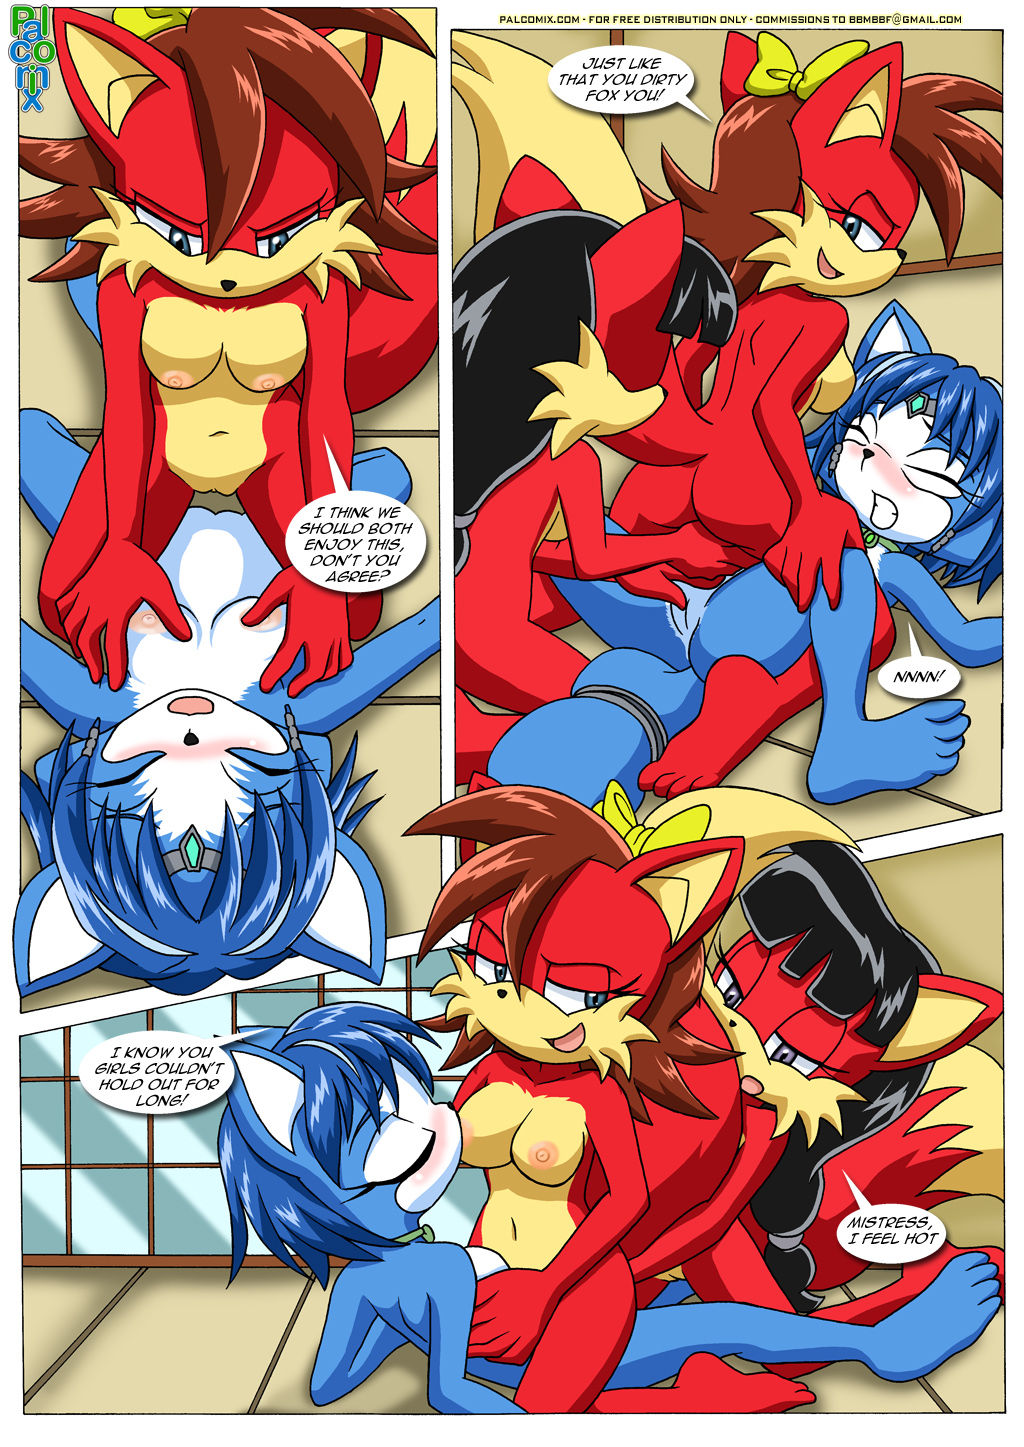 Palcomix FoXXXes (Sonic the Hedgehog, Star Fox) .